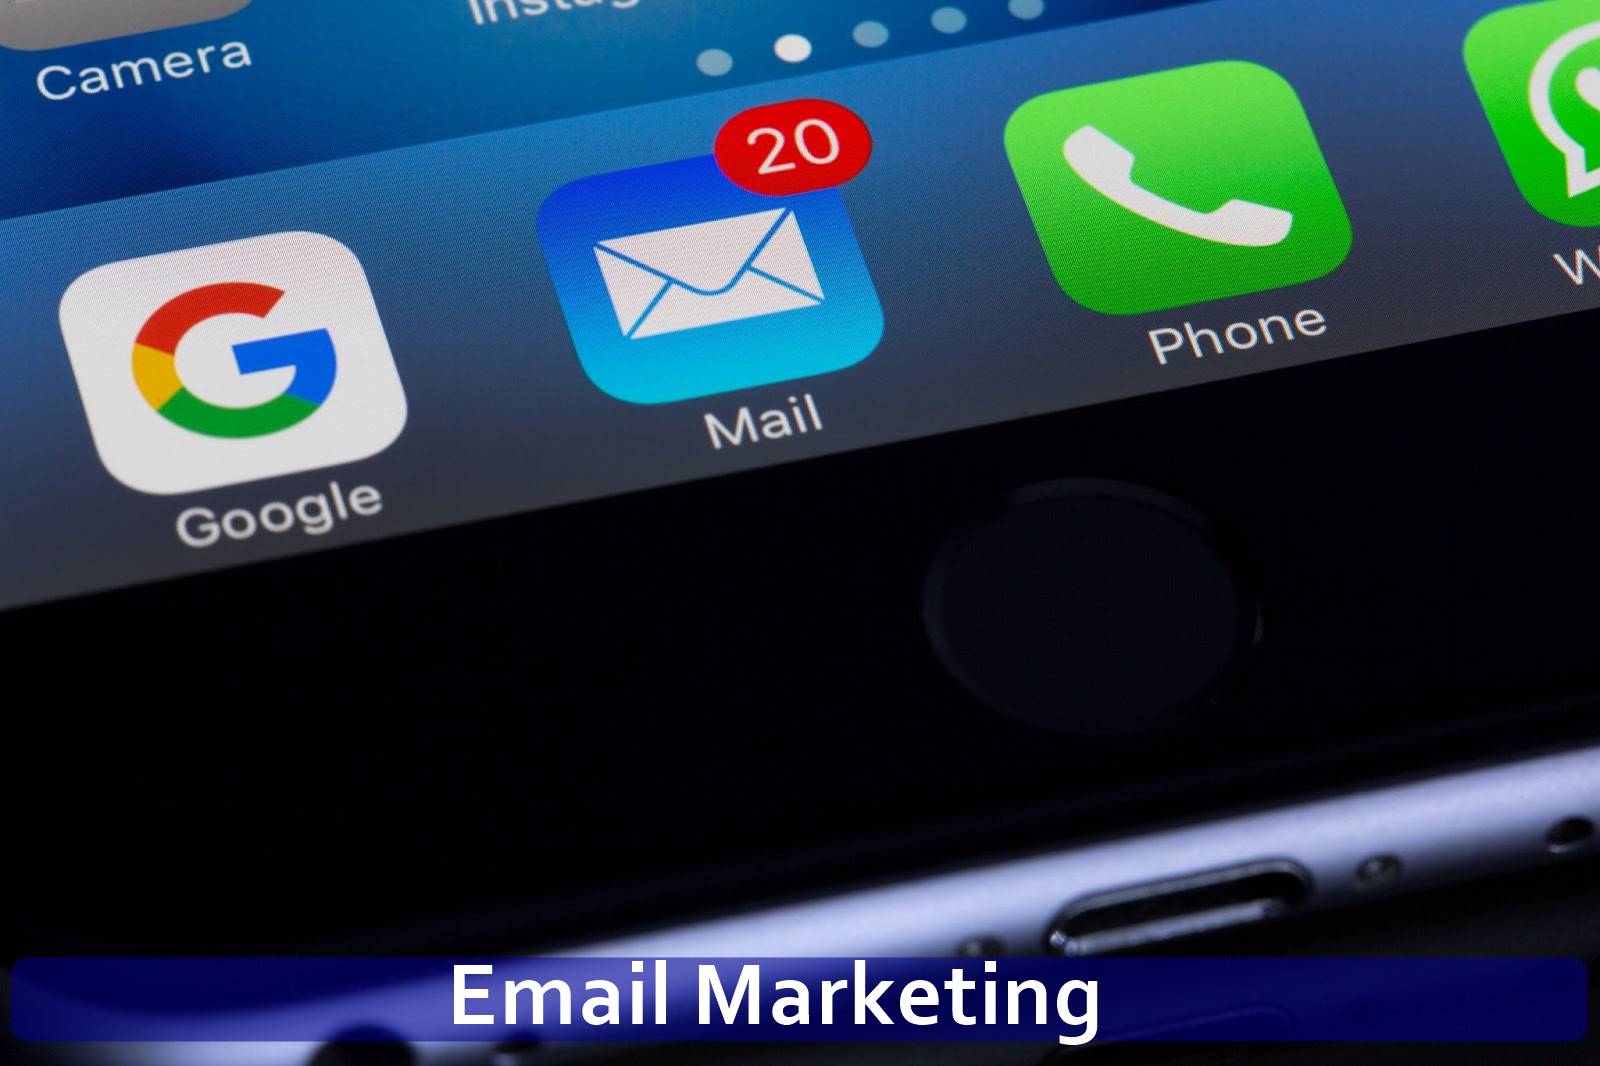 winning-marketing-strategies-by-popular-brands:email-marketing